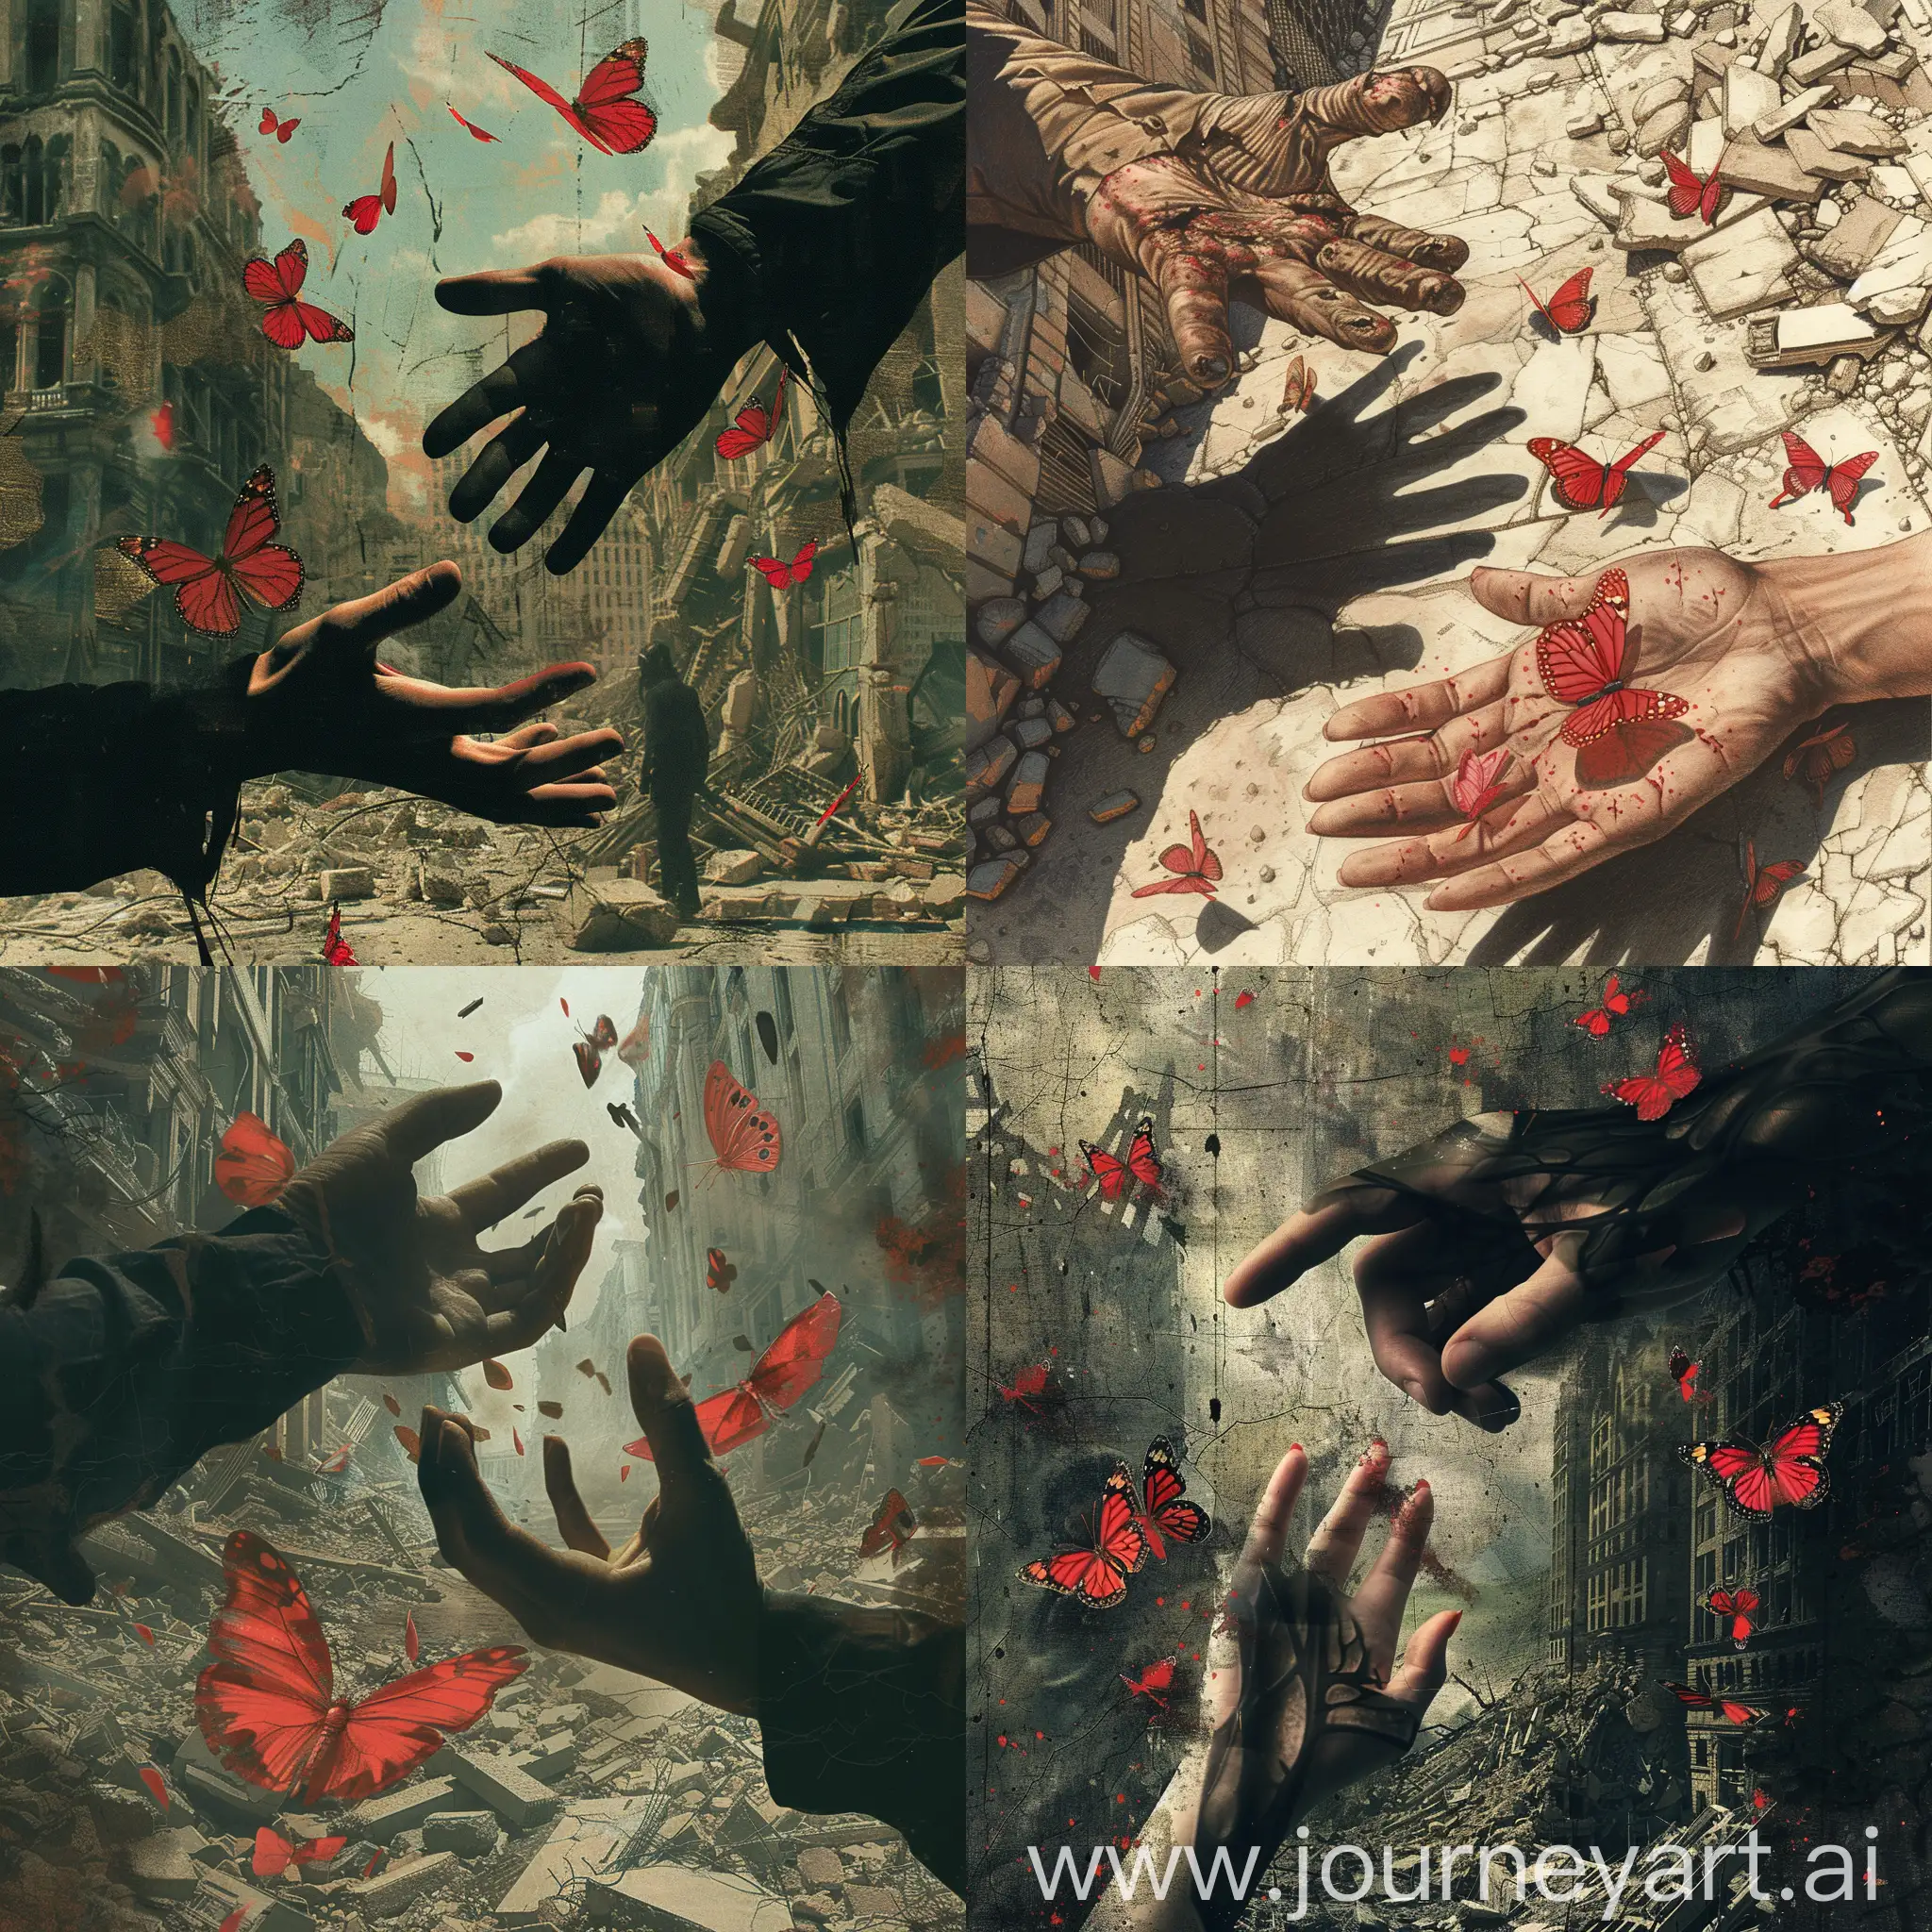 Red-Butterflies-Fluttering-Between-Hands-in-a-PostApocalyptic-Cityscape